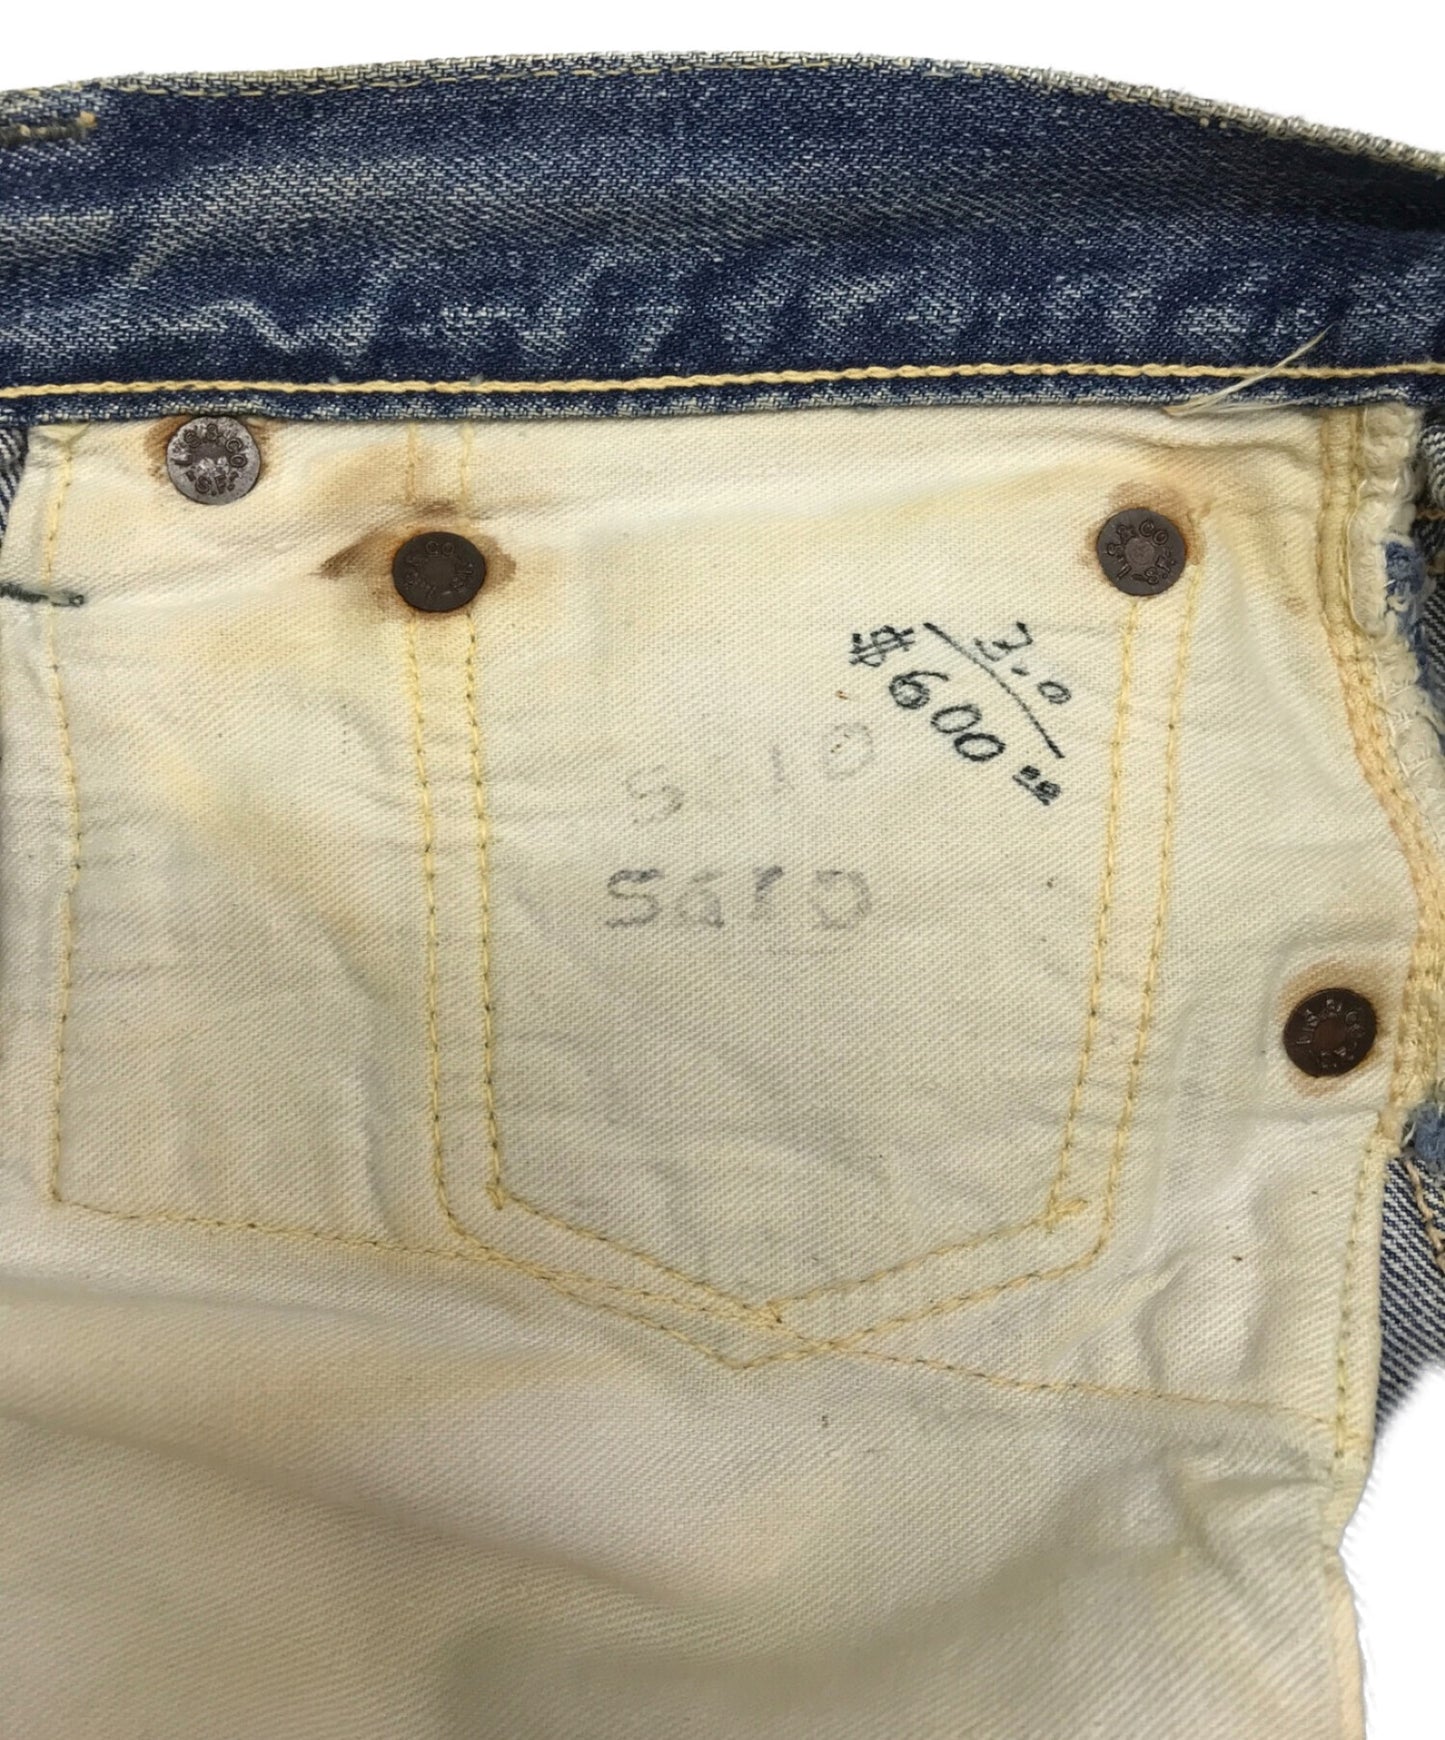 Levi的50年代大约60年代的复古501xx牛仔裤